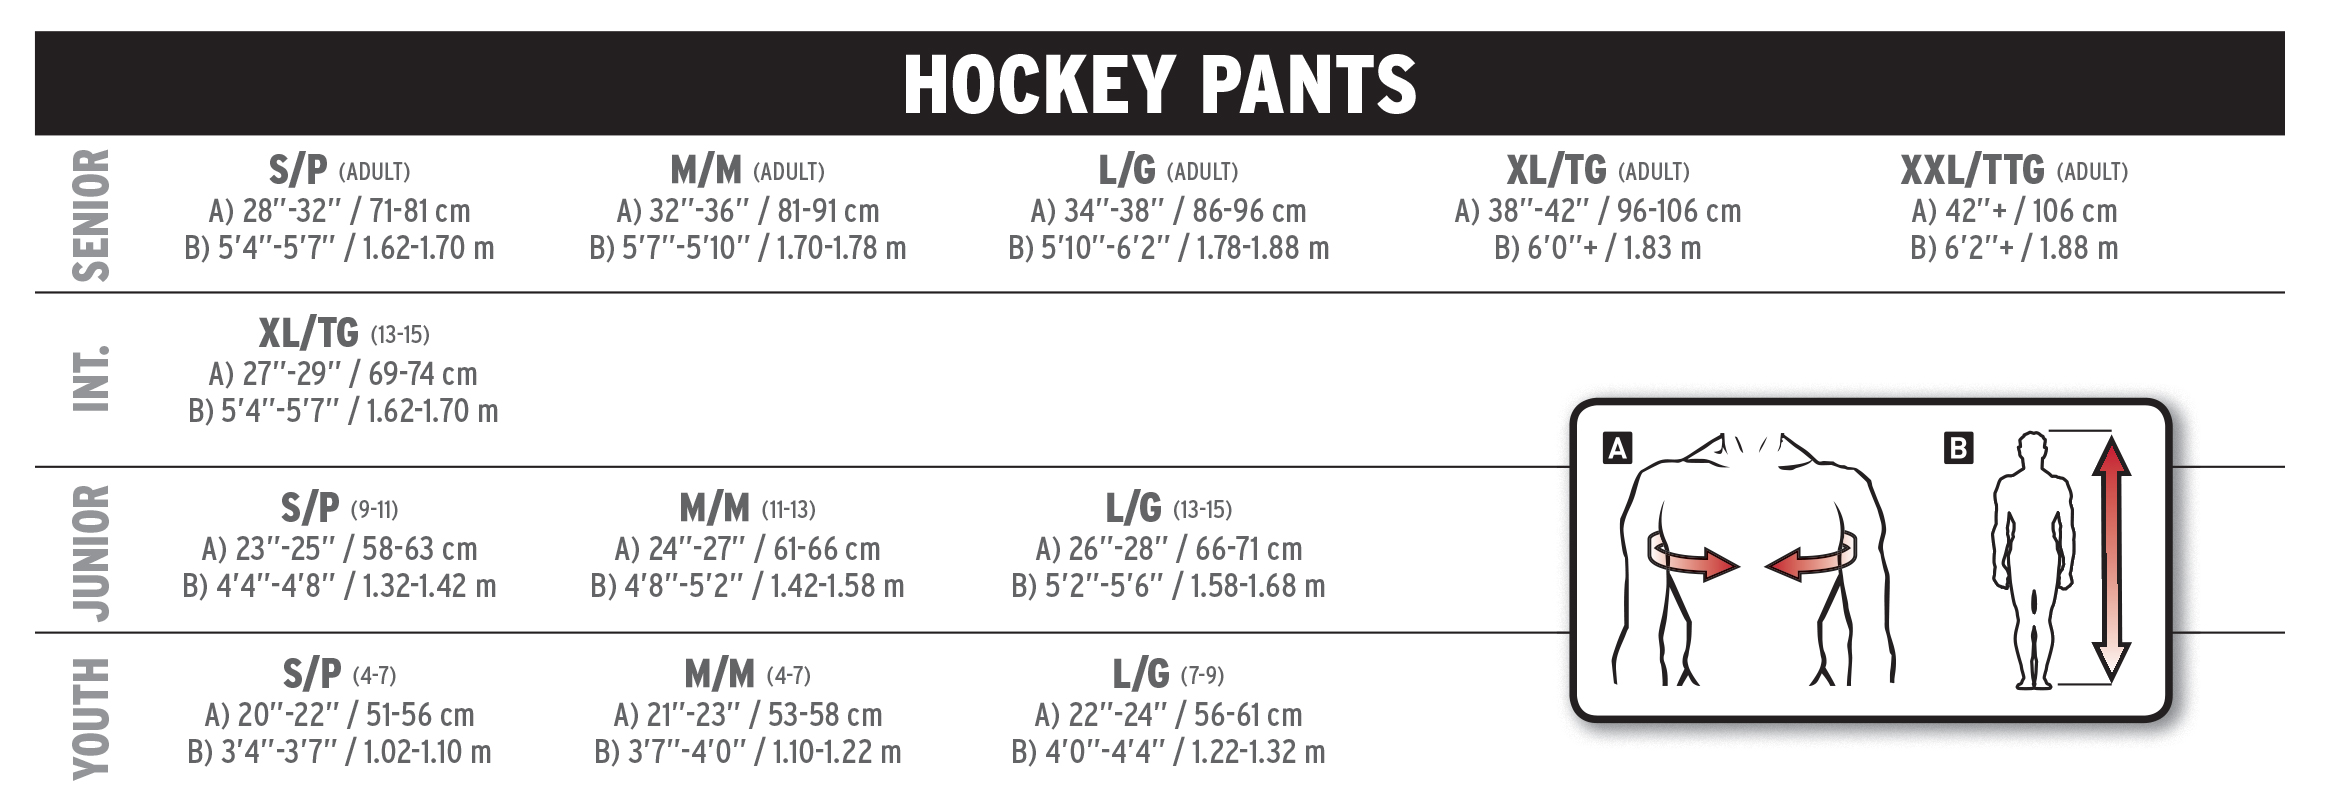 Ccm Hockey Size Chart